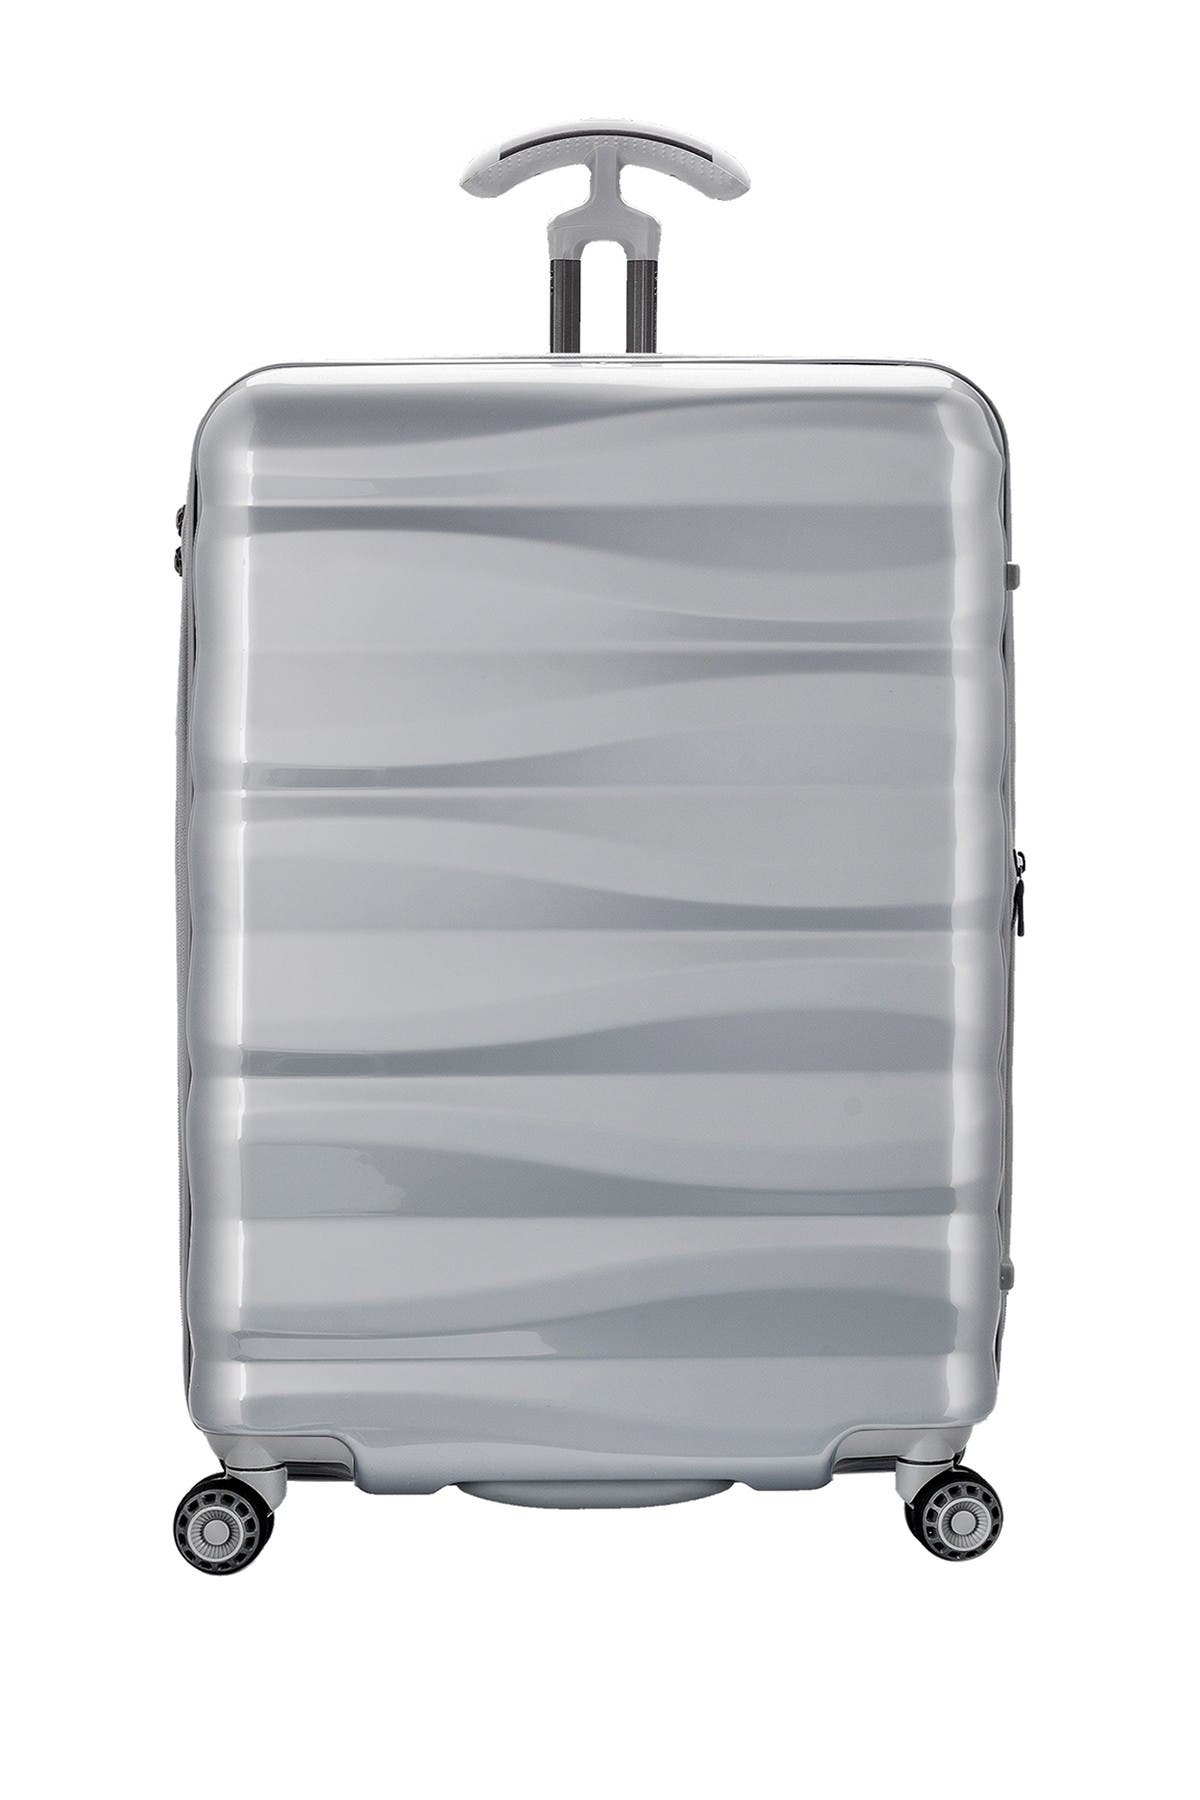 Traveler's Choice Edinburgh 29" Hardside Spinner Suitcase In Silver